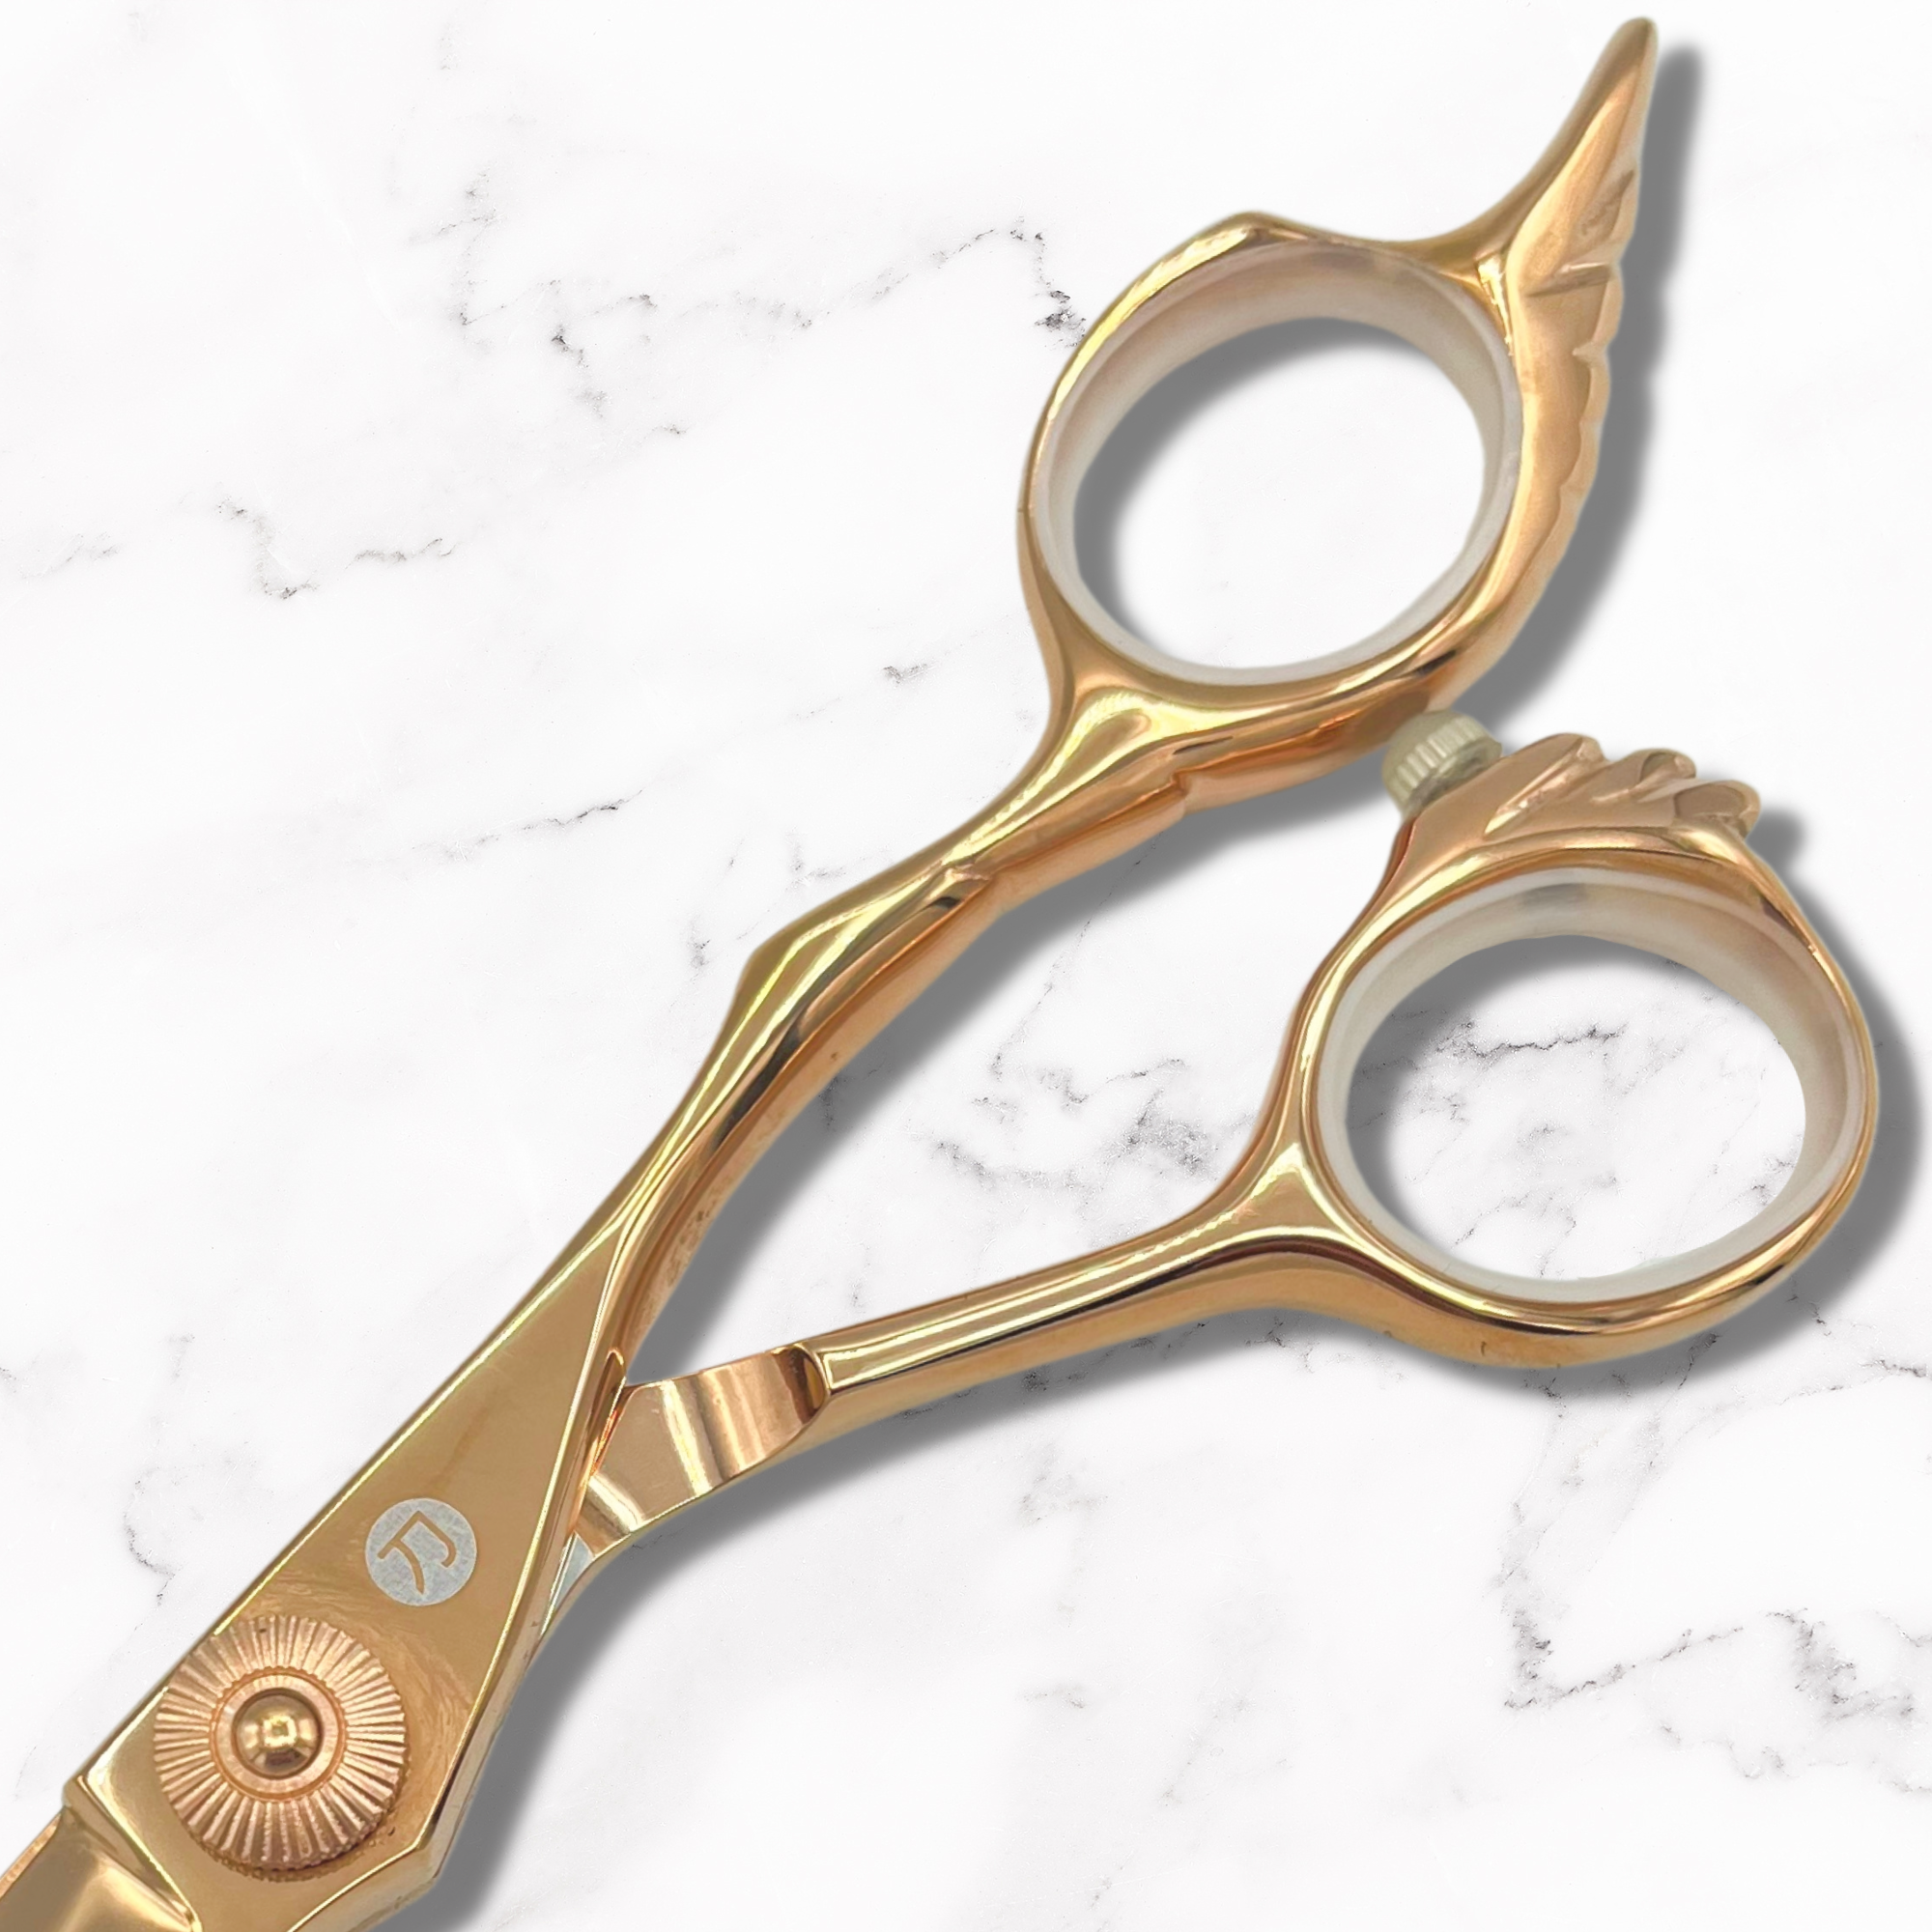 Tsuru Hair Shears/Scissors (Gold or Steel)